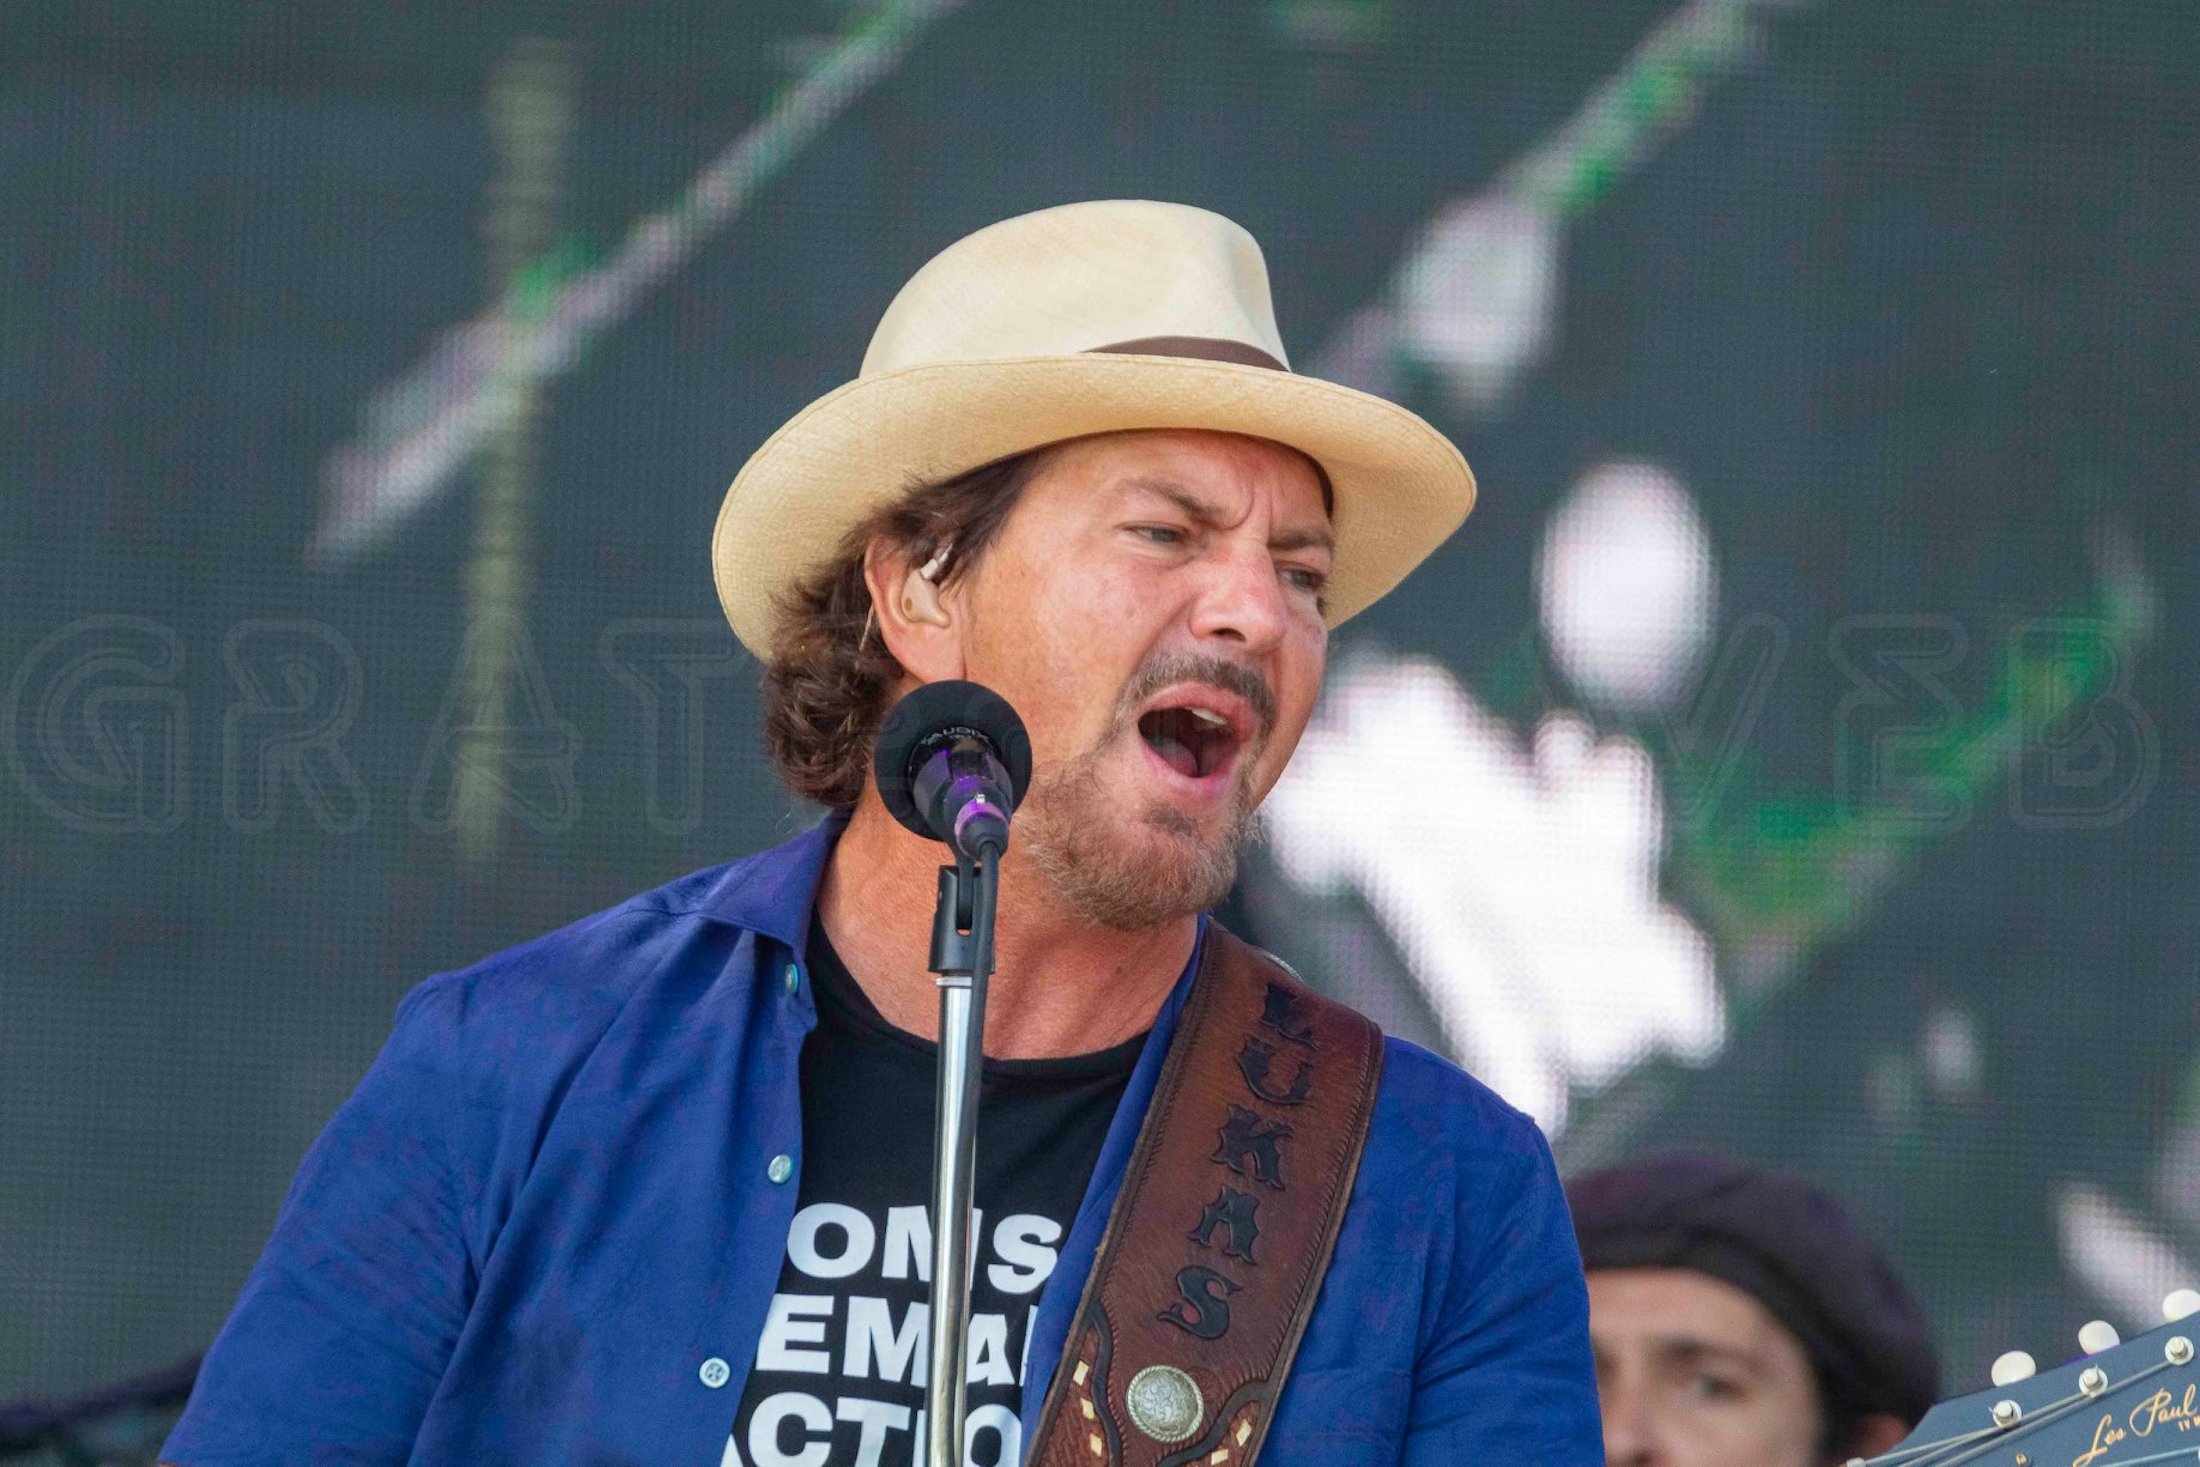 Watch Pearl Jam's Eddie Vedder Perform "Long Way" At Ohana Festival